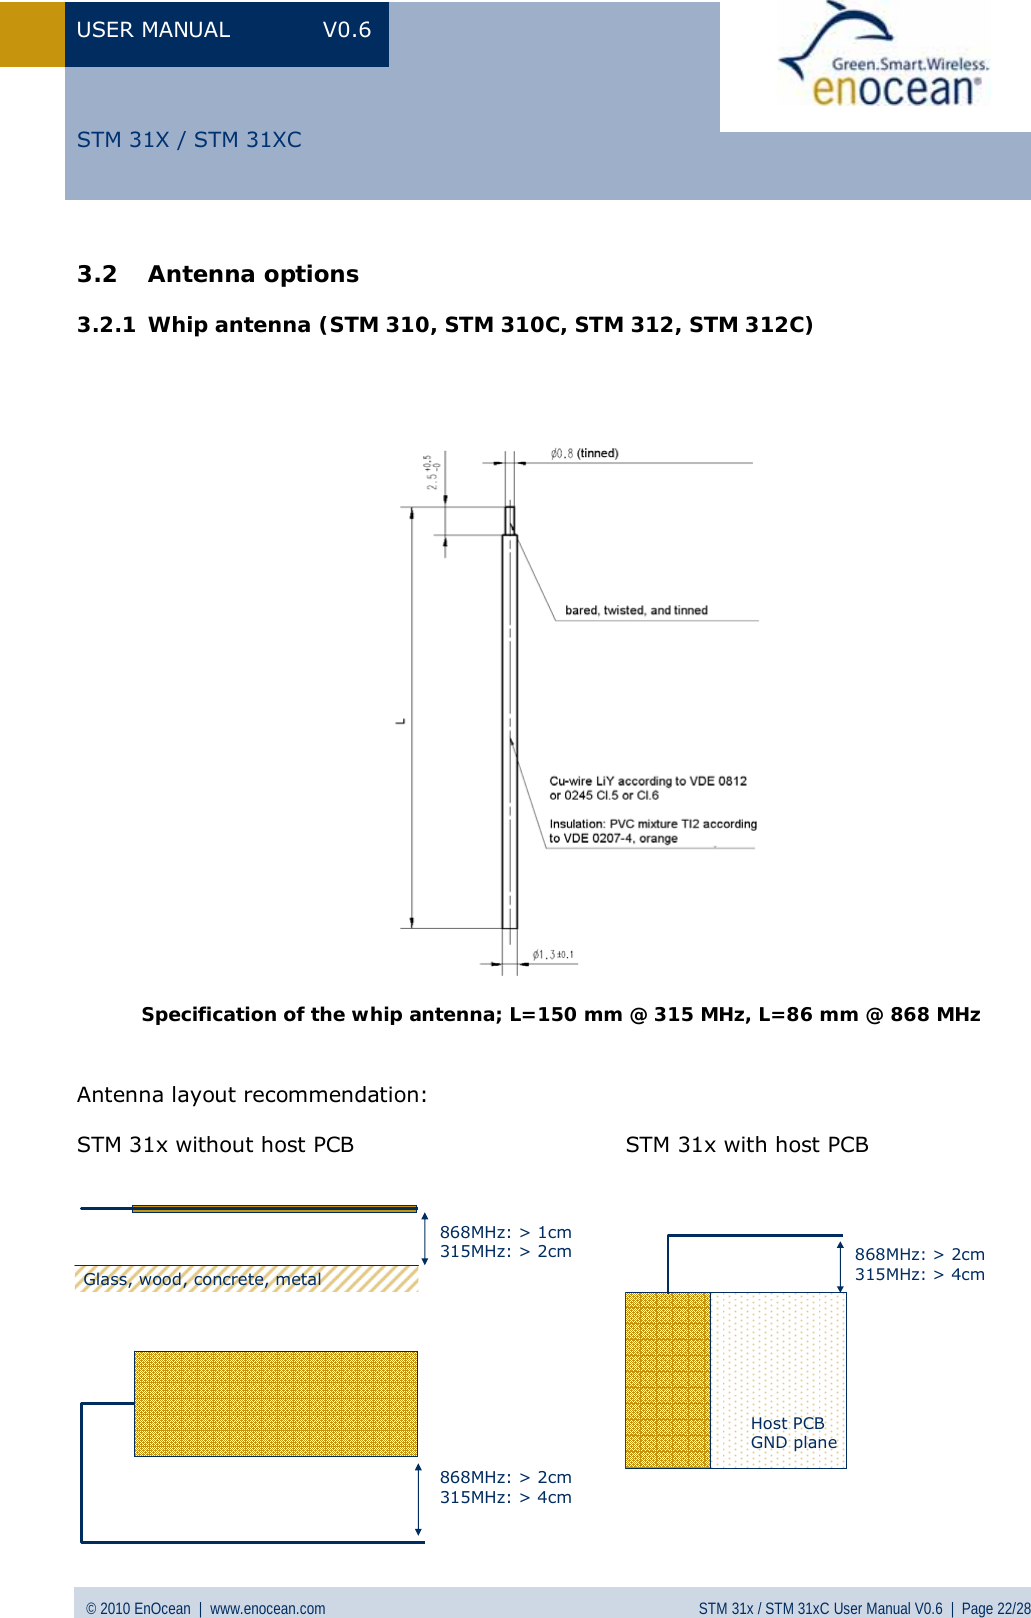 USER MANUAL V0.6 © 2010 EnOcean  |  www.enocean.com STM 31x / STM 31xC User Manual V0.6  |  Page 22/28  STM 31X / STM 31XC3.2 Antenna options 3.2.1 Whip antenna (STM 310, STM 310C, STM 312, STM 312C)       Specification of the whip antenna; L=150 mm @ 315 MHz, L=86 mm @ 868 MHz  Antenna layout recommendation:  STM 31x without host PCB                                     STM 31x with host PCB              Glass, wood, concrete, metal868MHz: &gt; 2cm315MHz: &gt; 4cm868MHz: &gt; 1cm315MHz: &gt; 2cm868MHz: &gt; 2cm315MHz: &gt; 4cmHost PCBGND plane